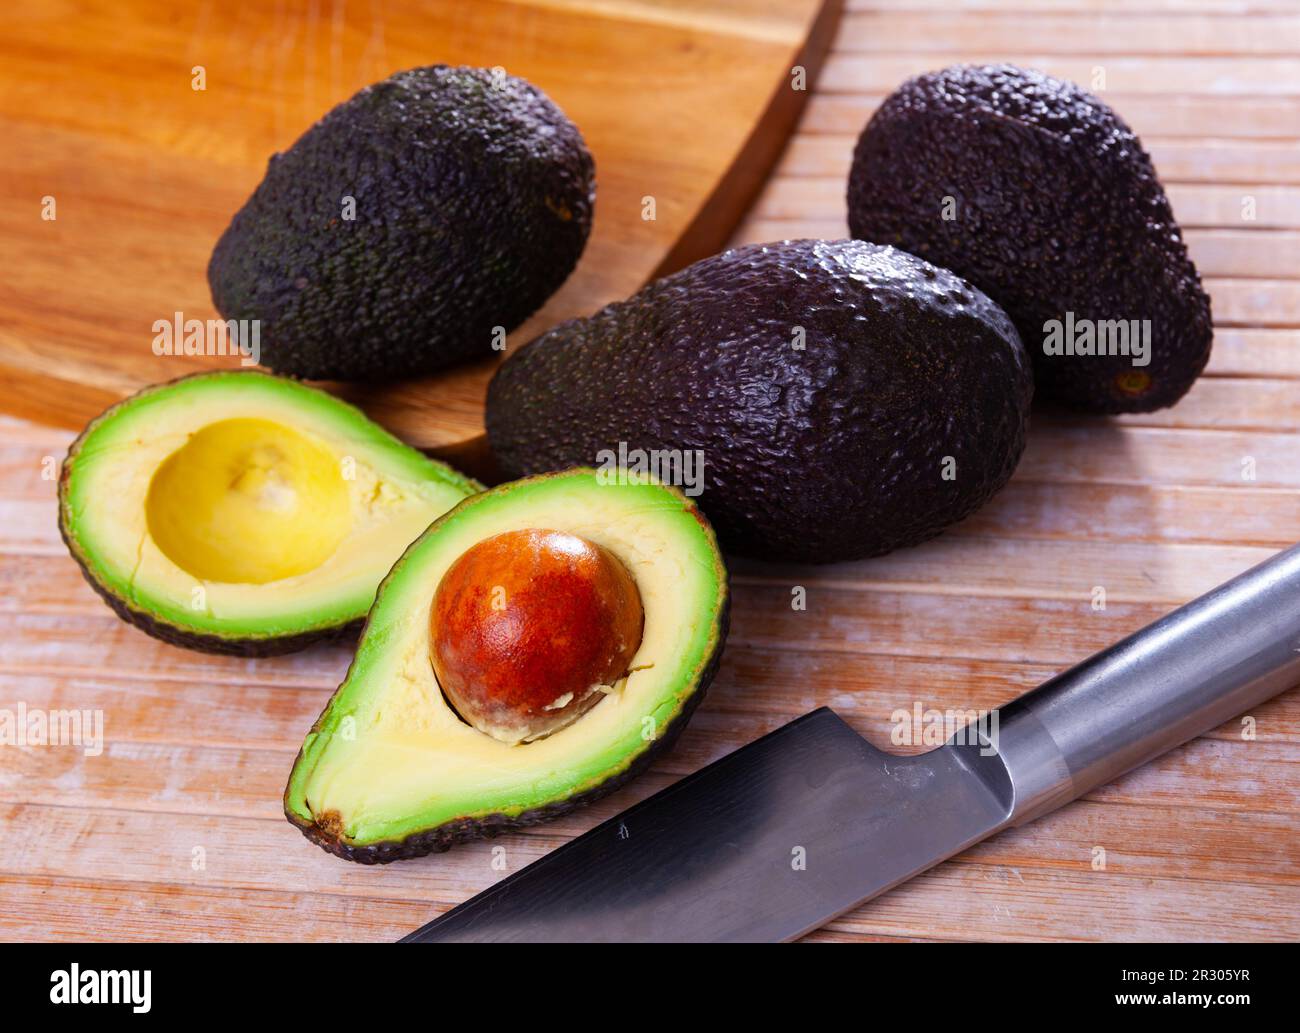 https://c8.alamy.com/comp/2R305YR/whole-and-halved-avocados-on-wooden-cutting-board-2R305YR.jpg